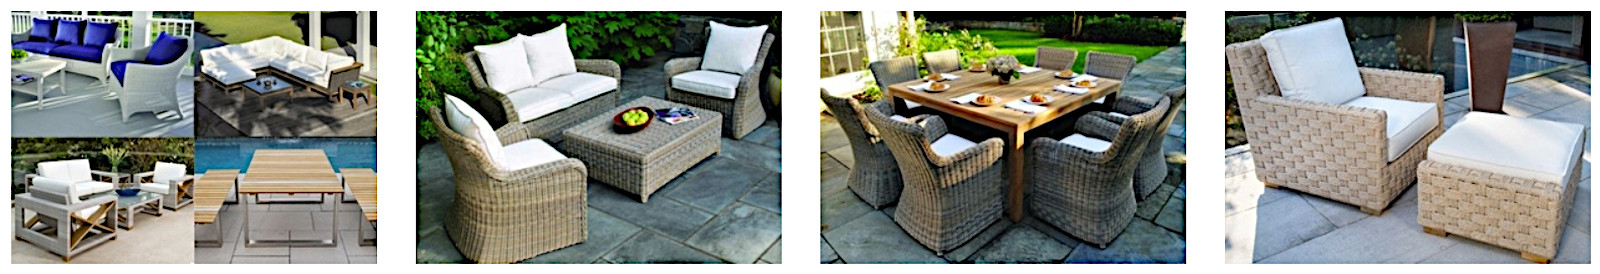 Kingsley Bate teak garden furniture popularly priced